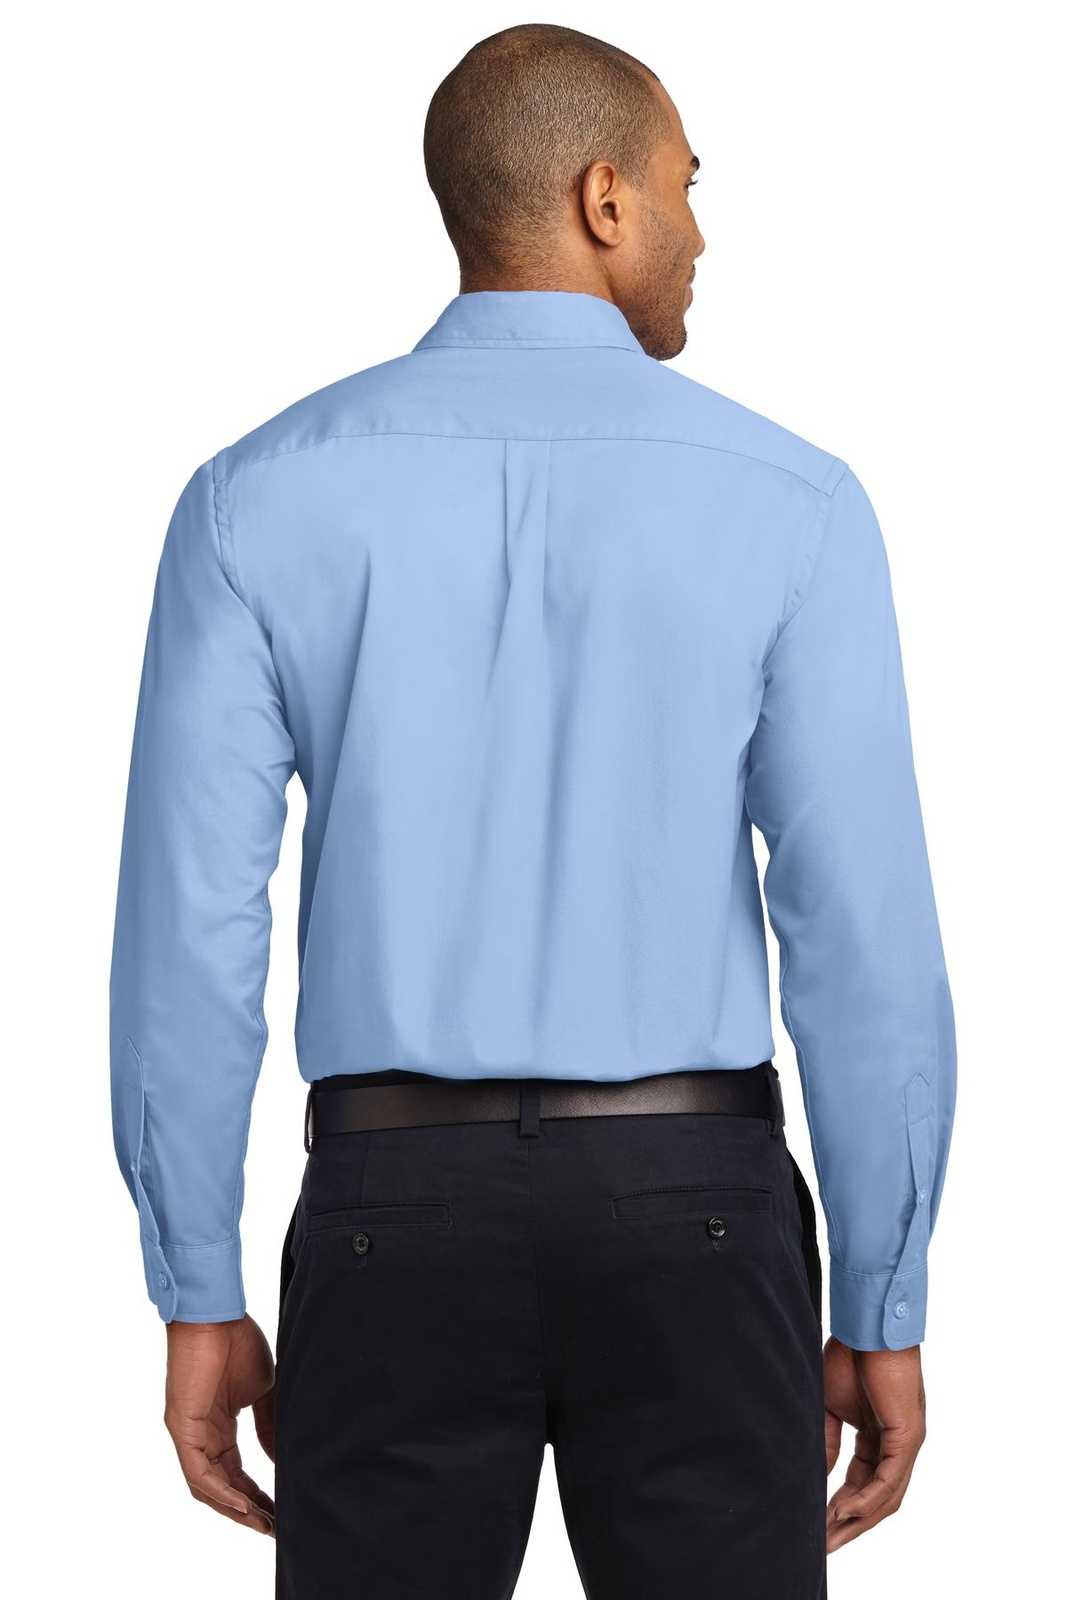 Port Authority TLS608 Tall Long Sleeve Easy Care Shirt - Light Blue Light Stone - HIT a Double - 2